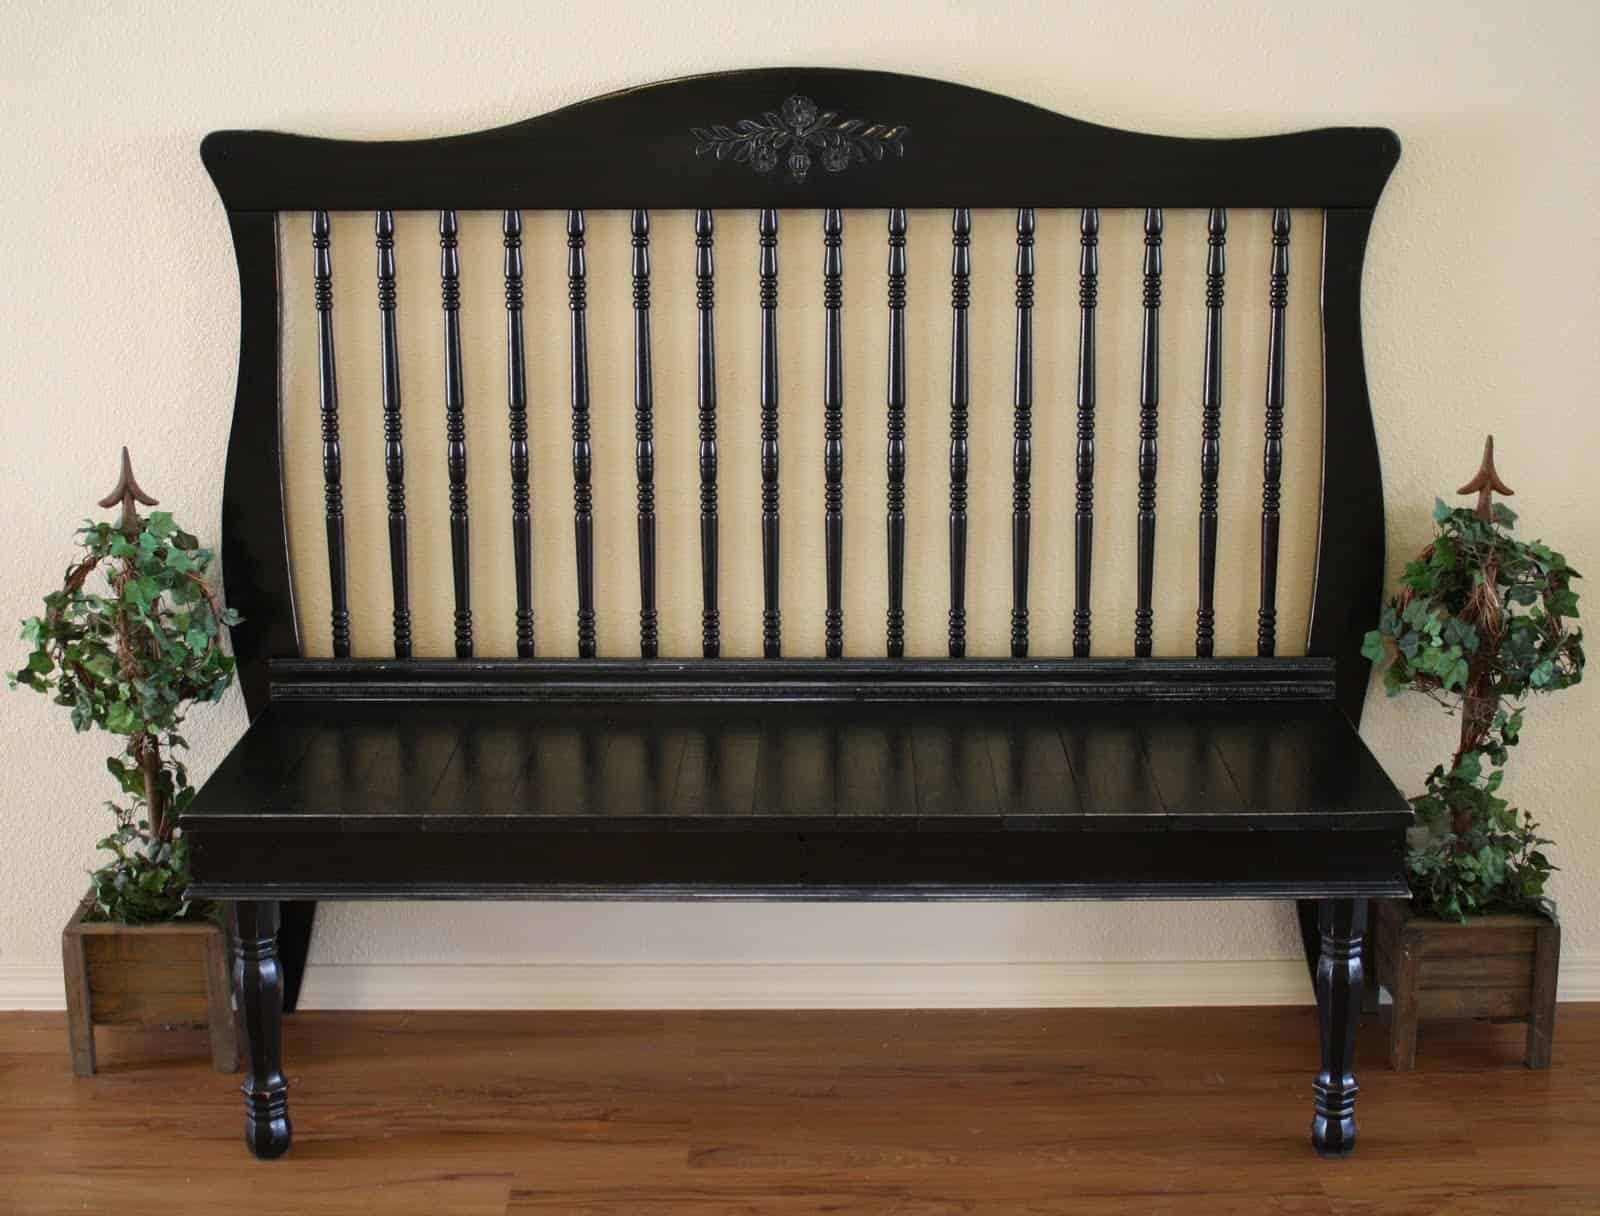 Crib to bench